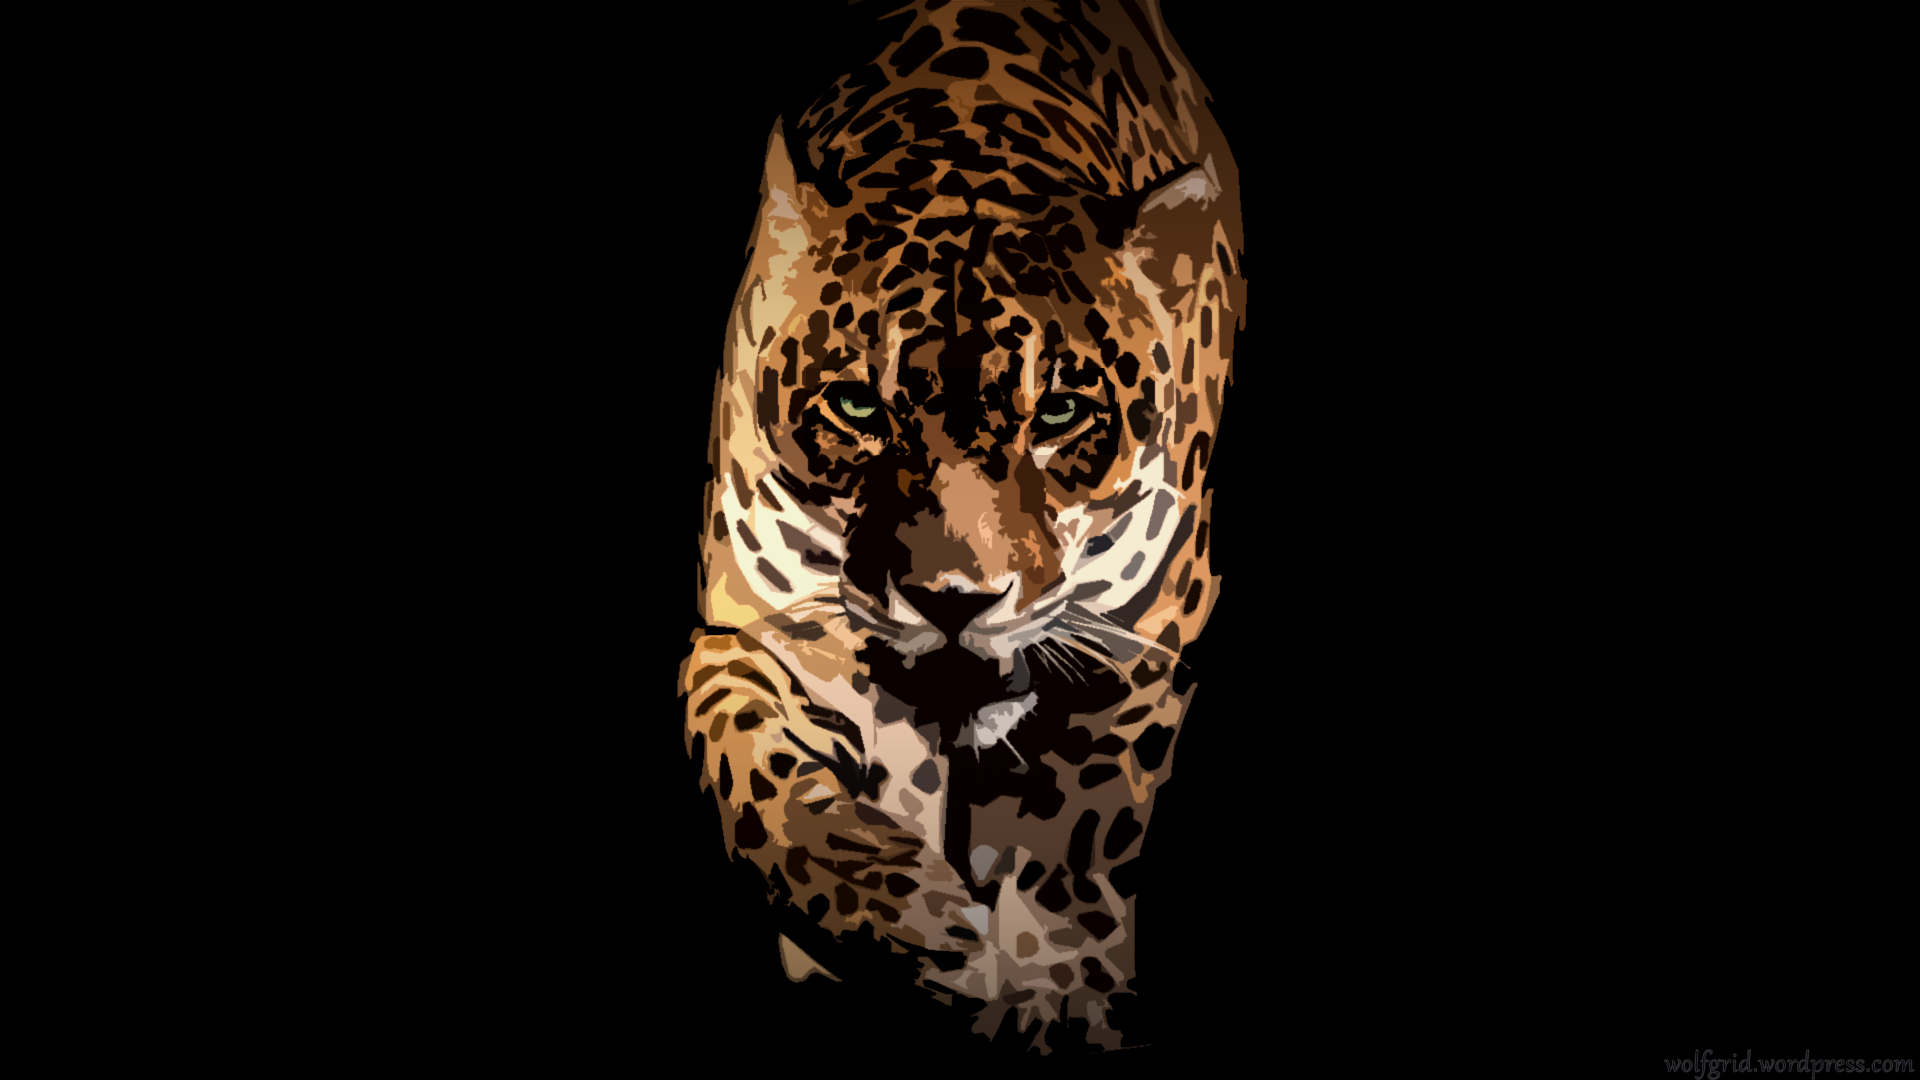 General 1920x1080 animals big cats artwork simple background jaguars